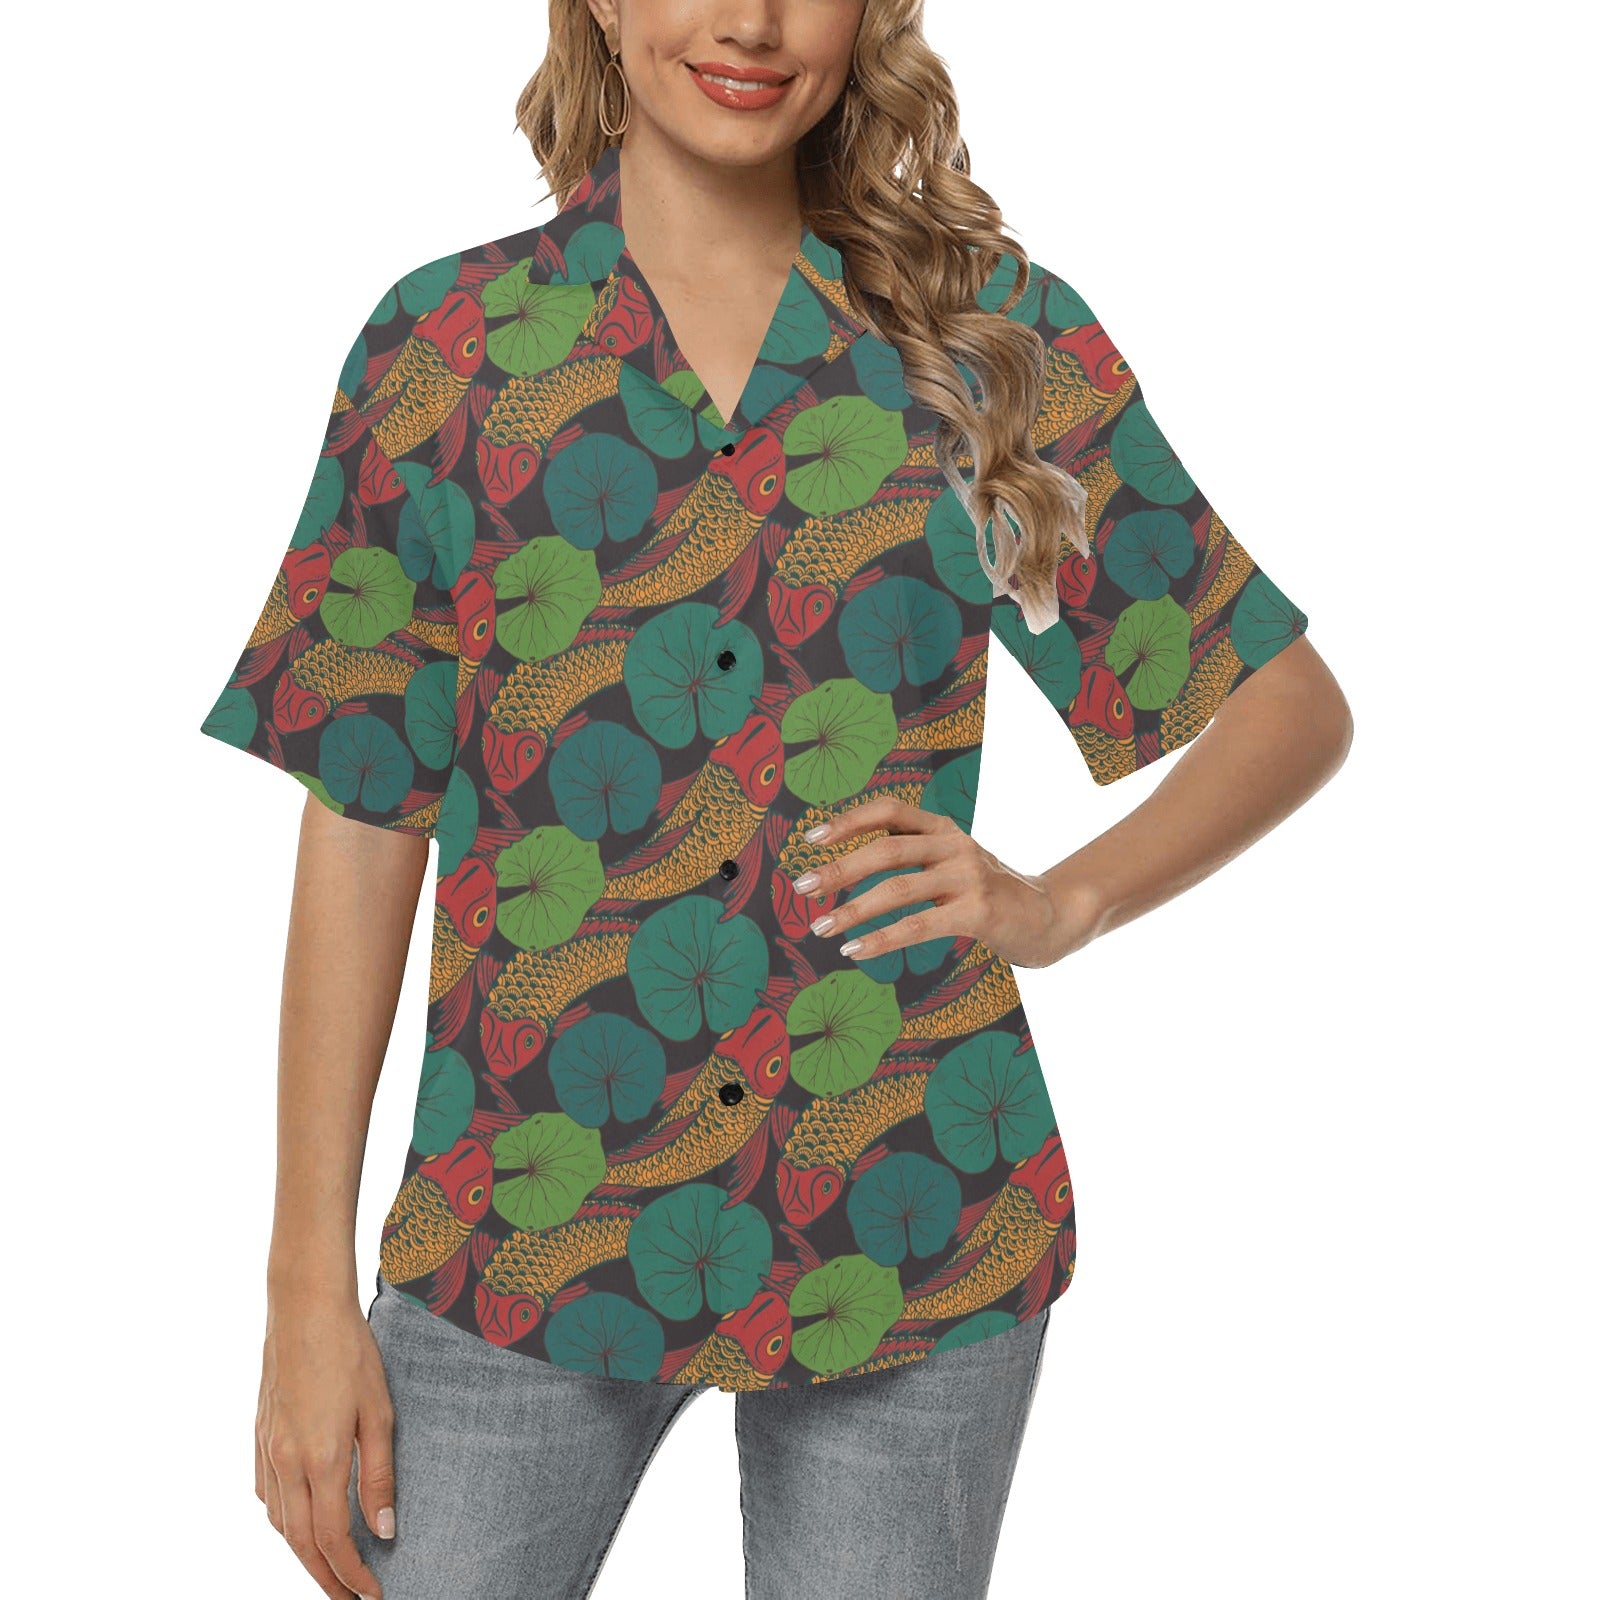 KOI Fish Pattern Print Design 01 Women's Hawaiian Shirt